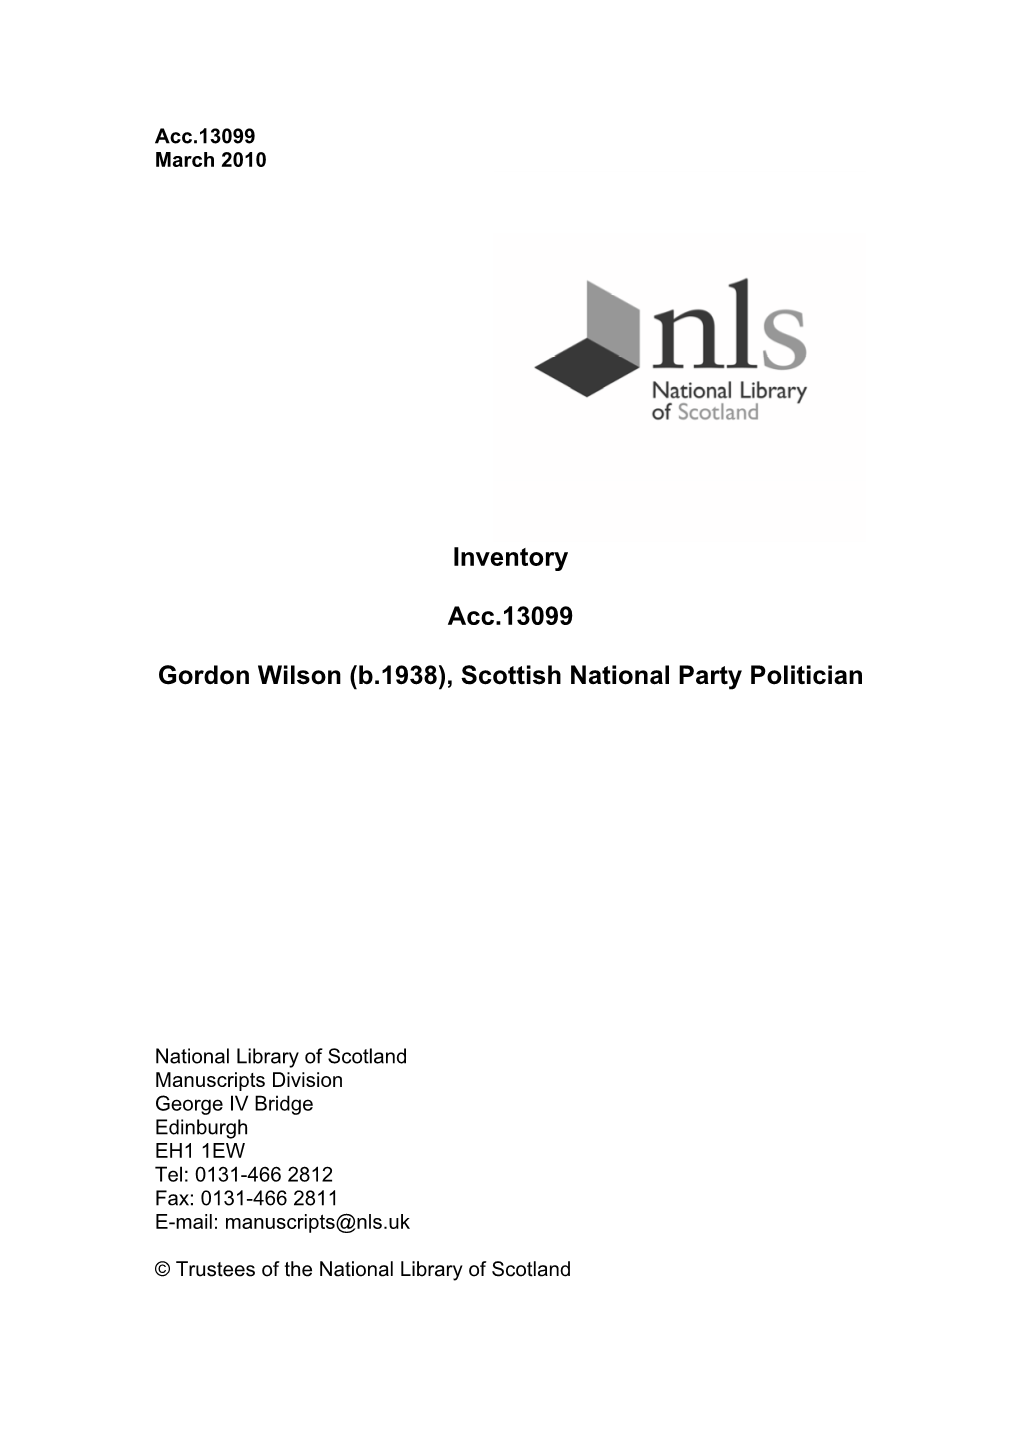 Inventory Acc.13099 Gordon Wilson (B.1938), Scottish National Party